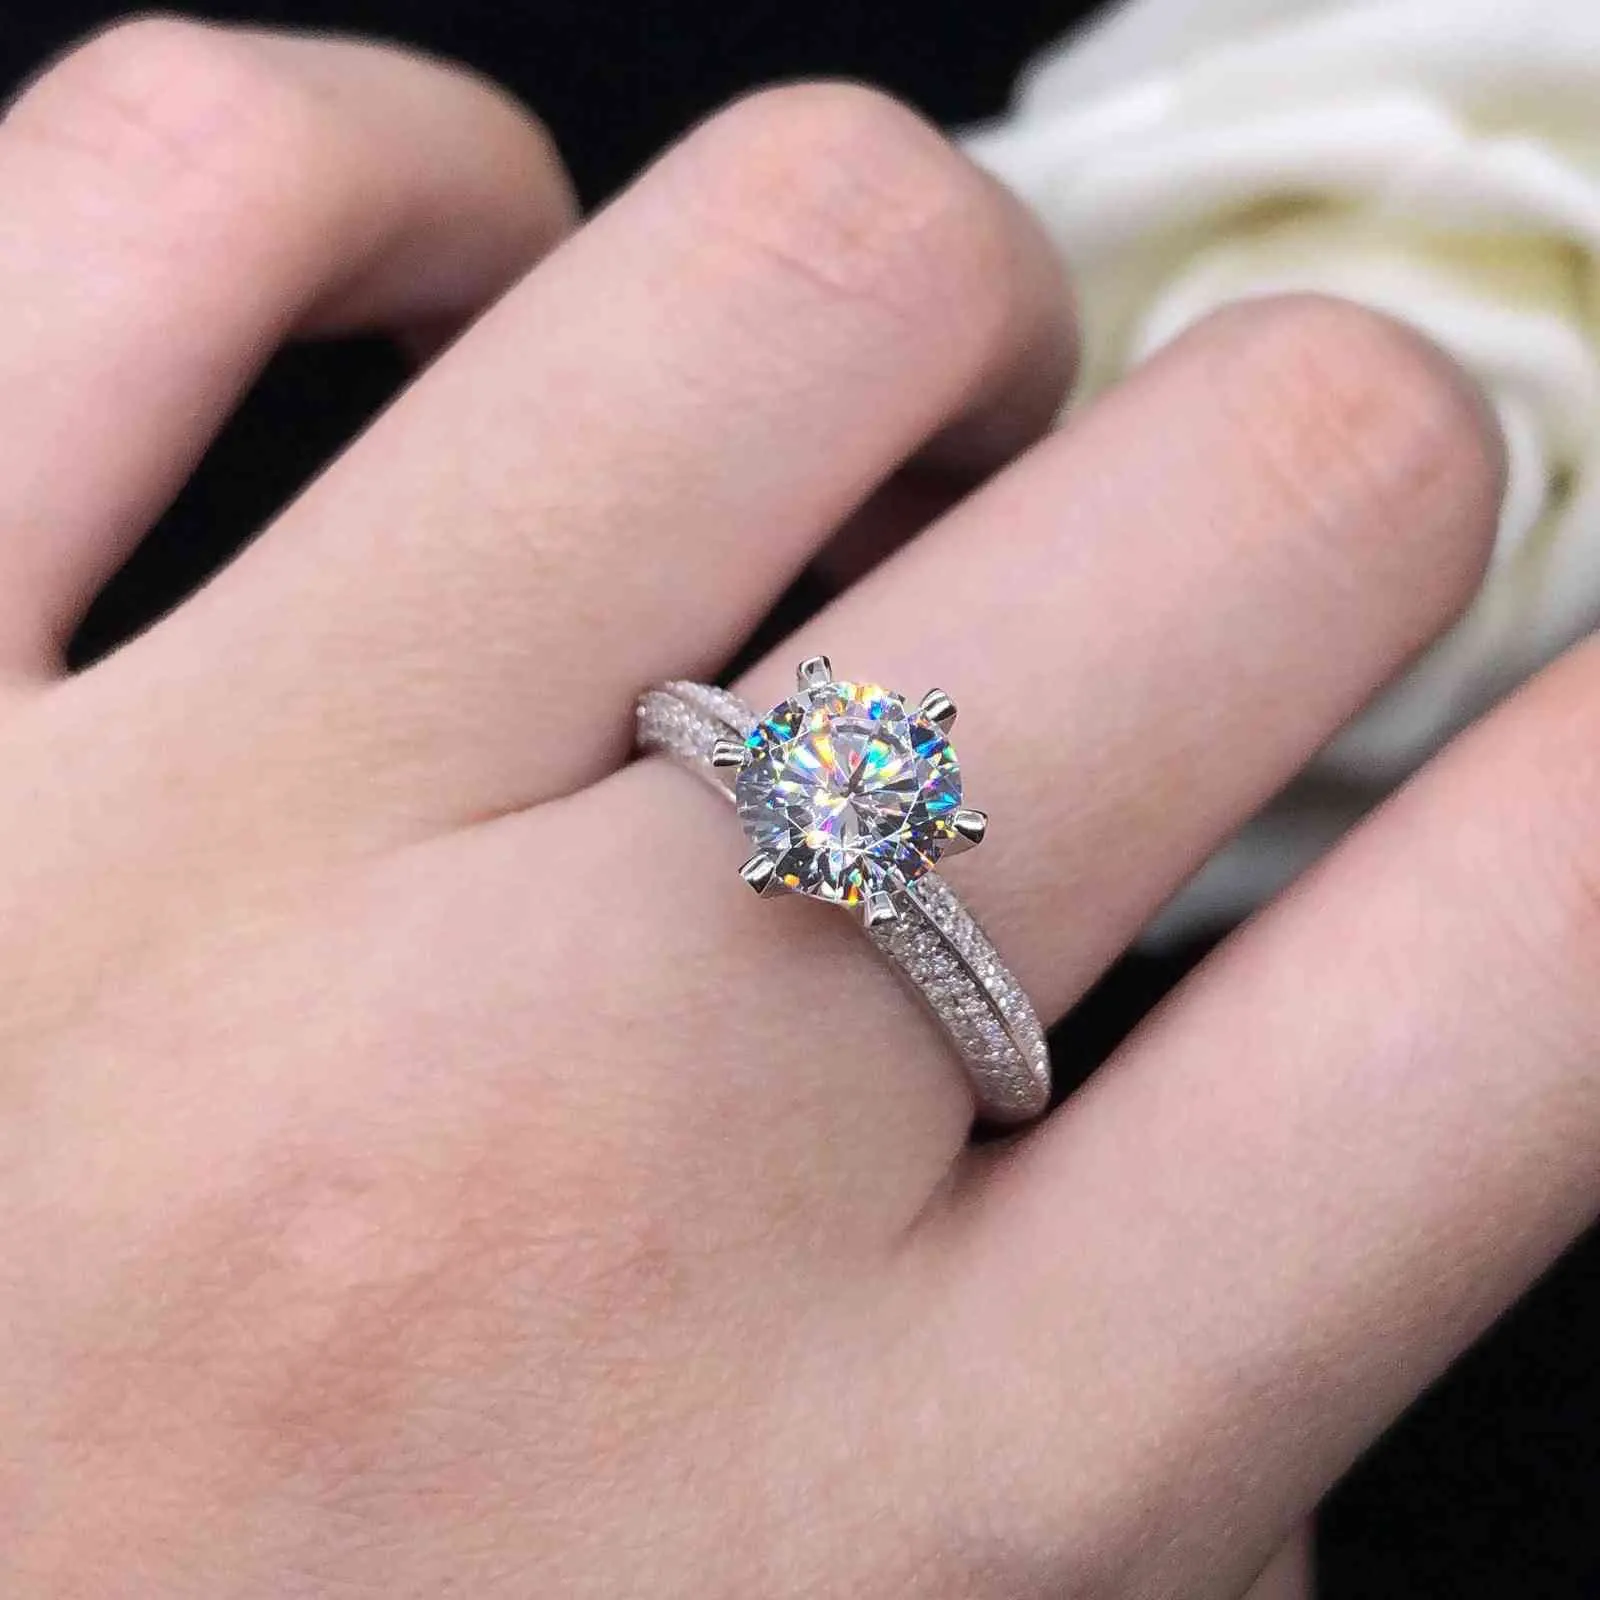 Fantastic 15ct Round Cut Diamond Ring for Women Wedding Jewelry Solid Platinum 950 R1096665936